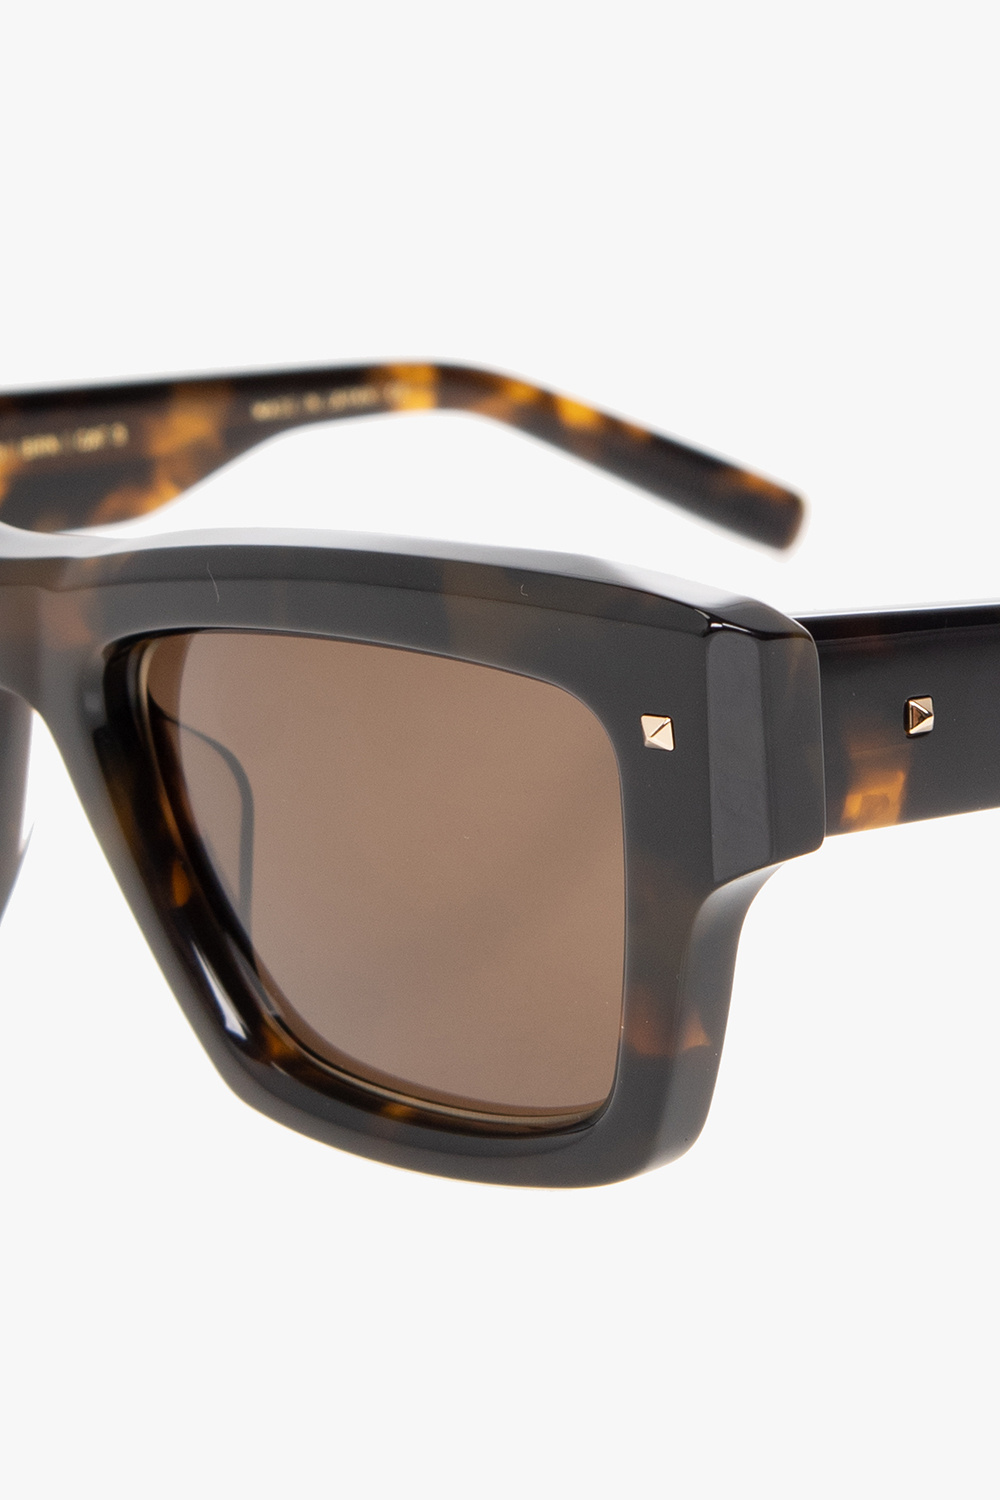 Valentino Eyewear Patterned sunglasses